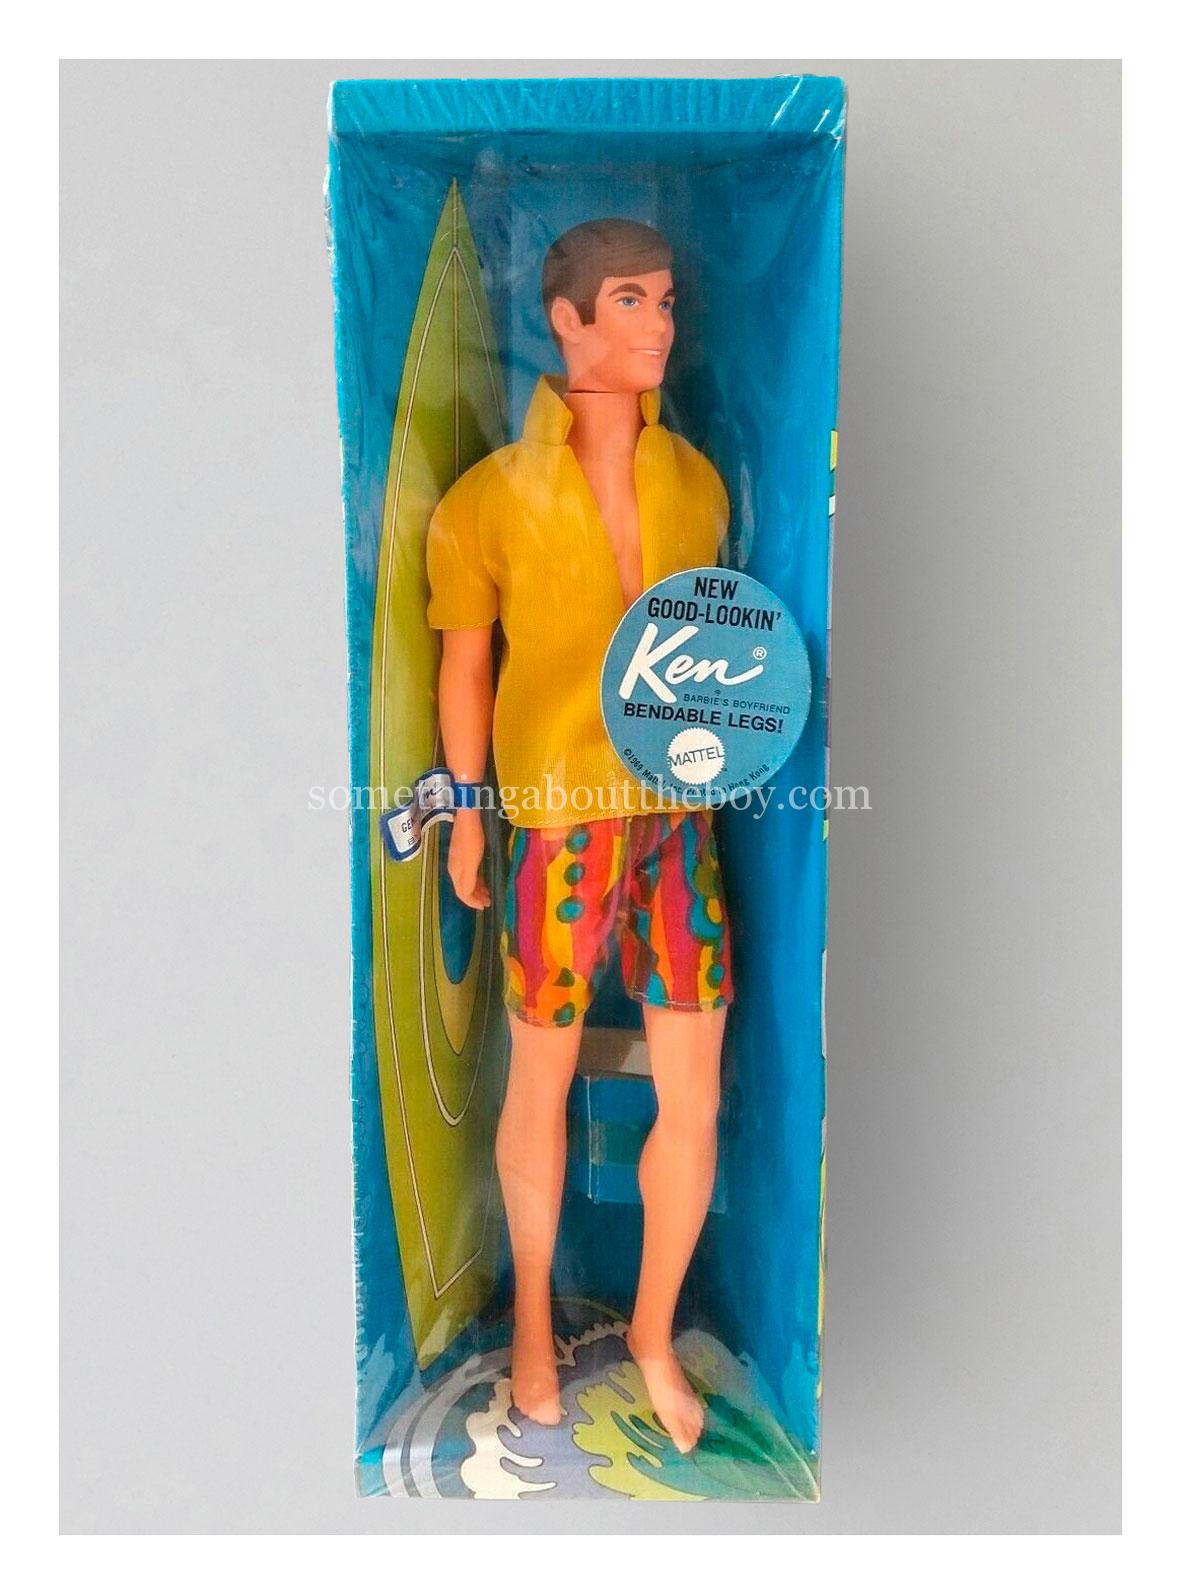 1970-71 #1124 New Good-Lookin' Ken in original packaging